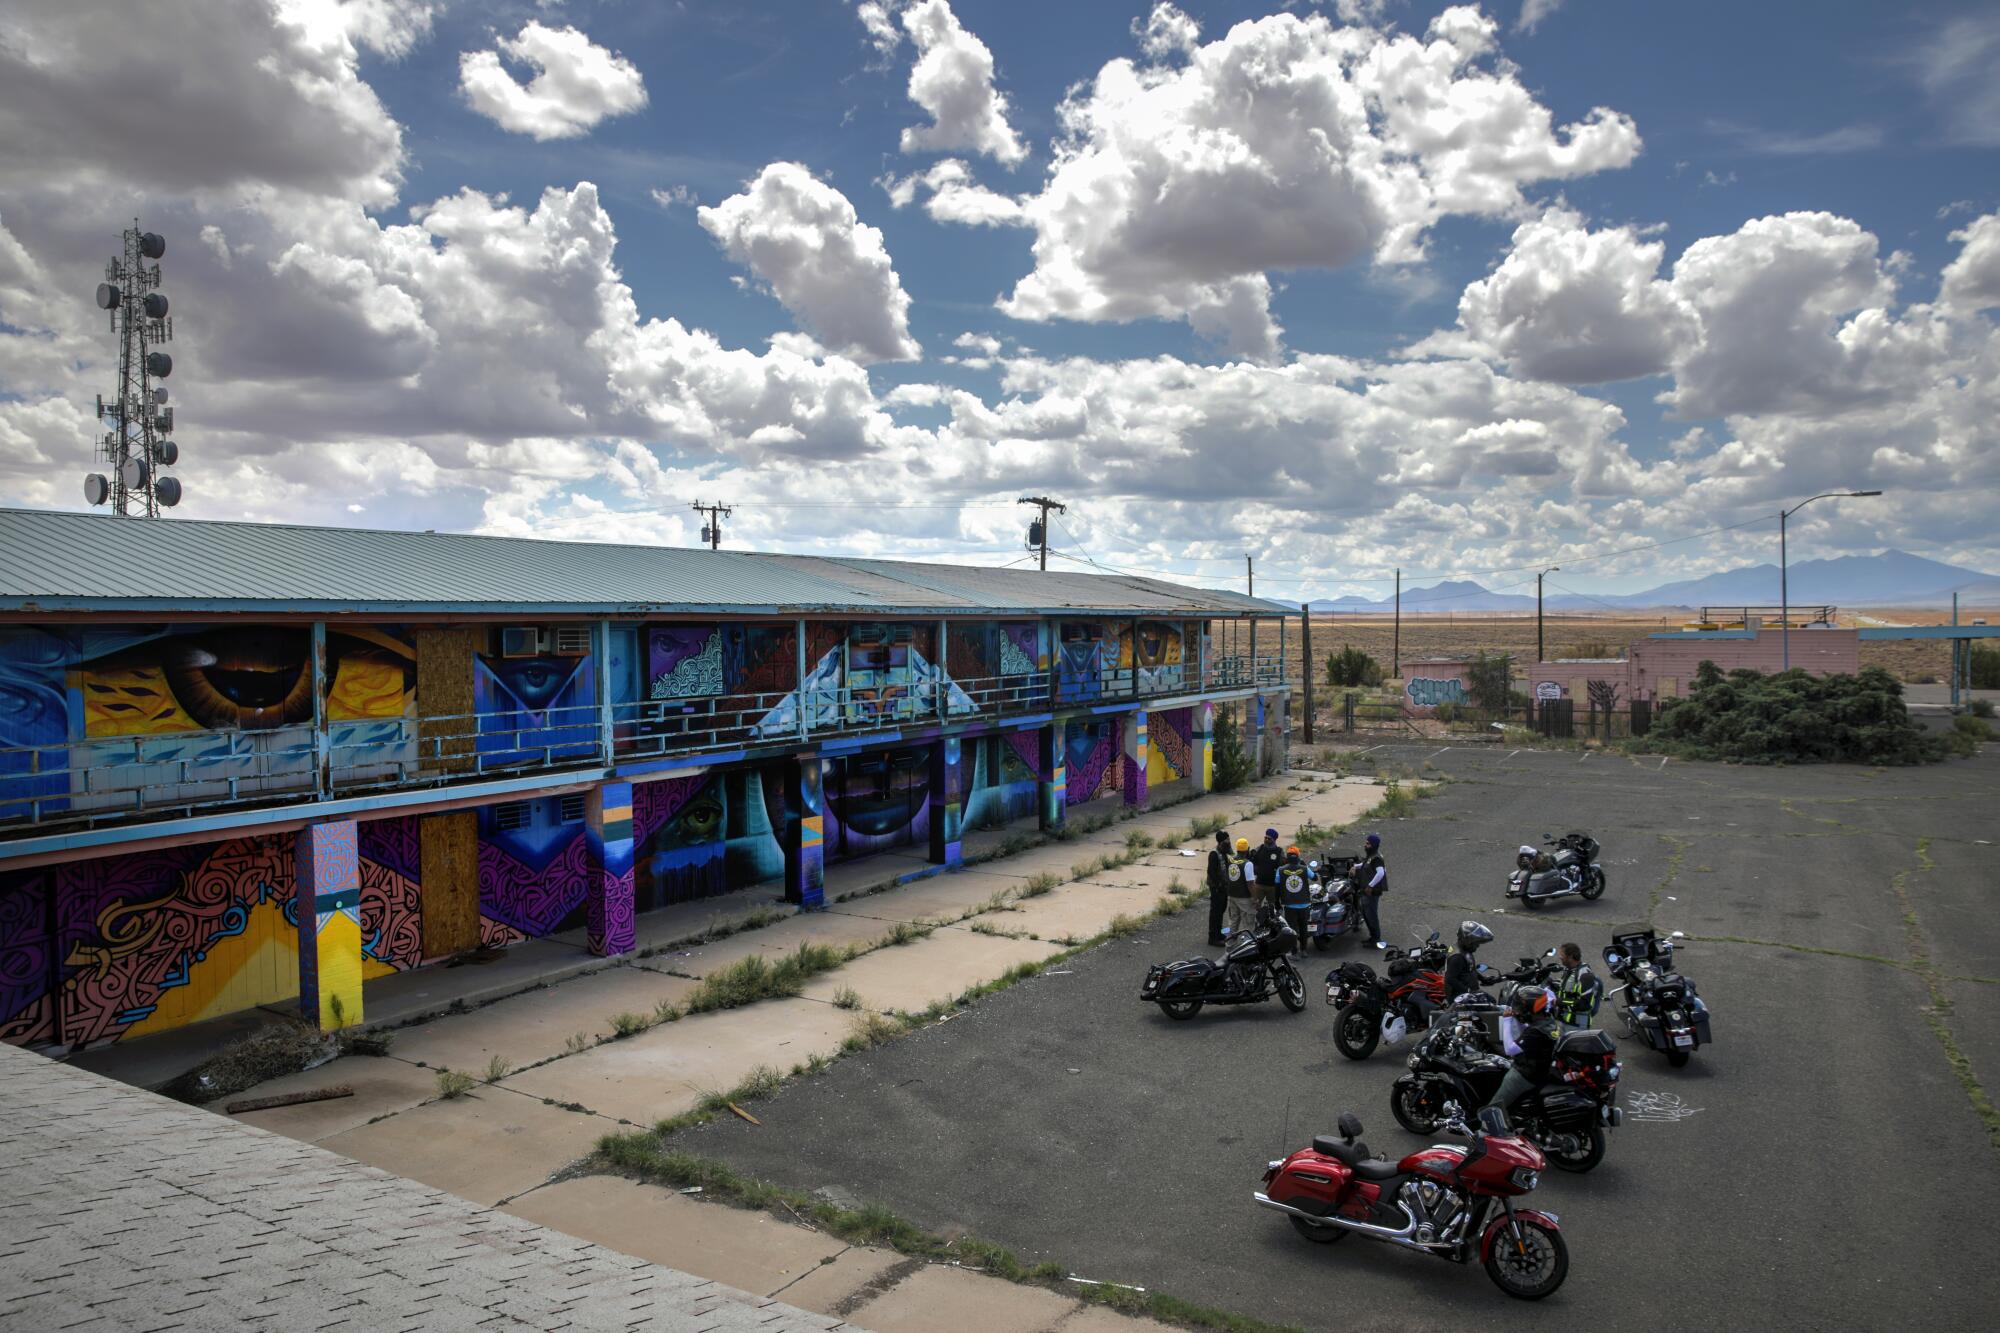 Sikh Motorcycle Club USA stops at an abandoned motel 